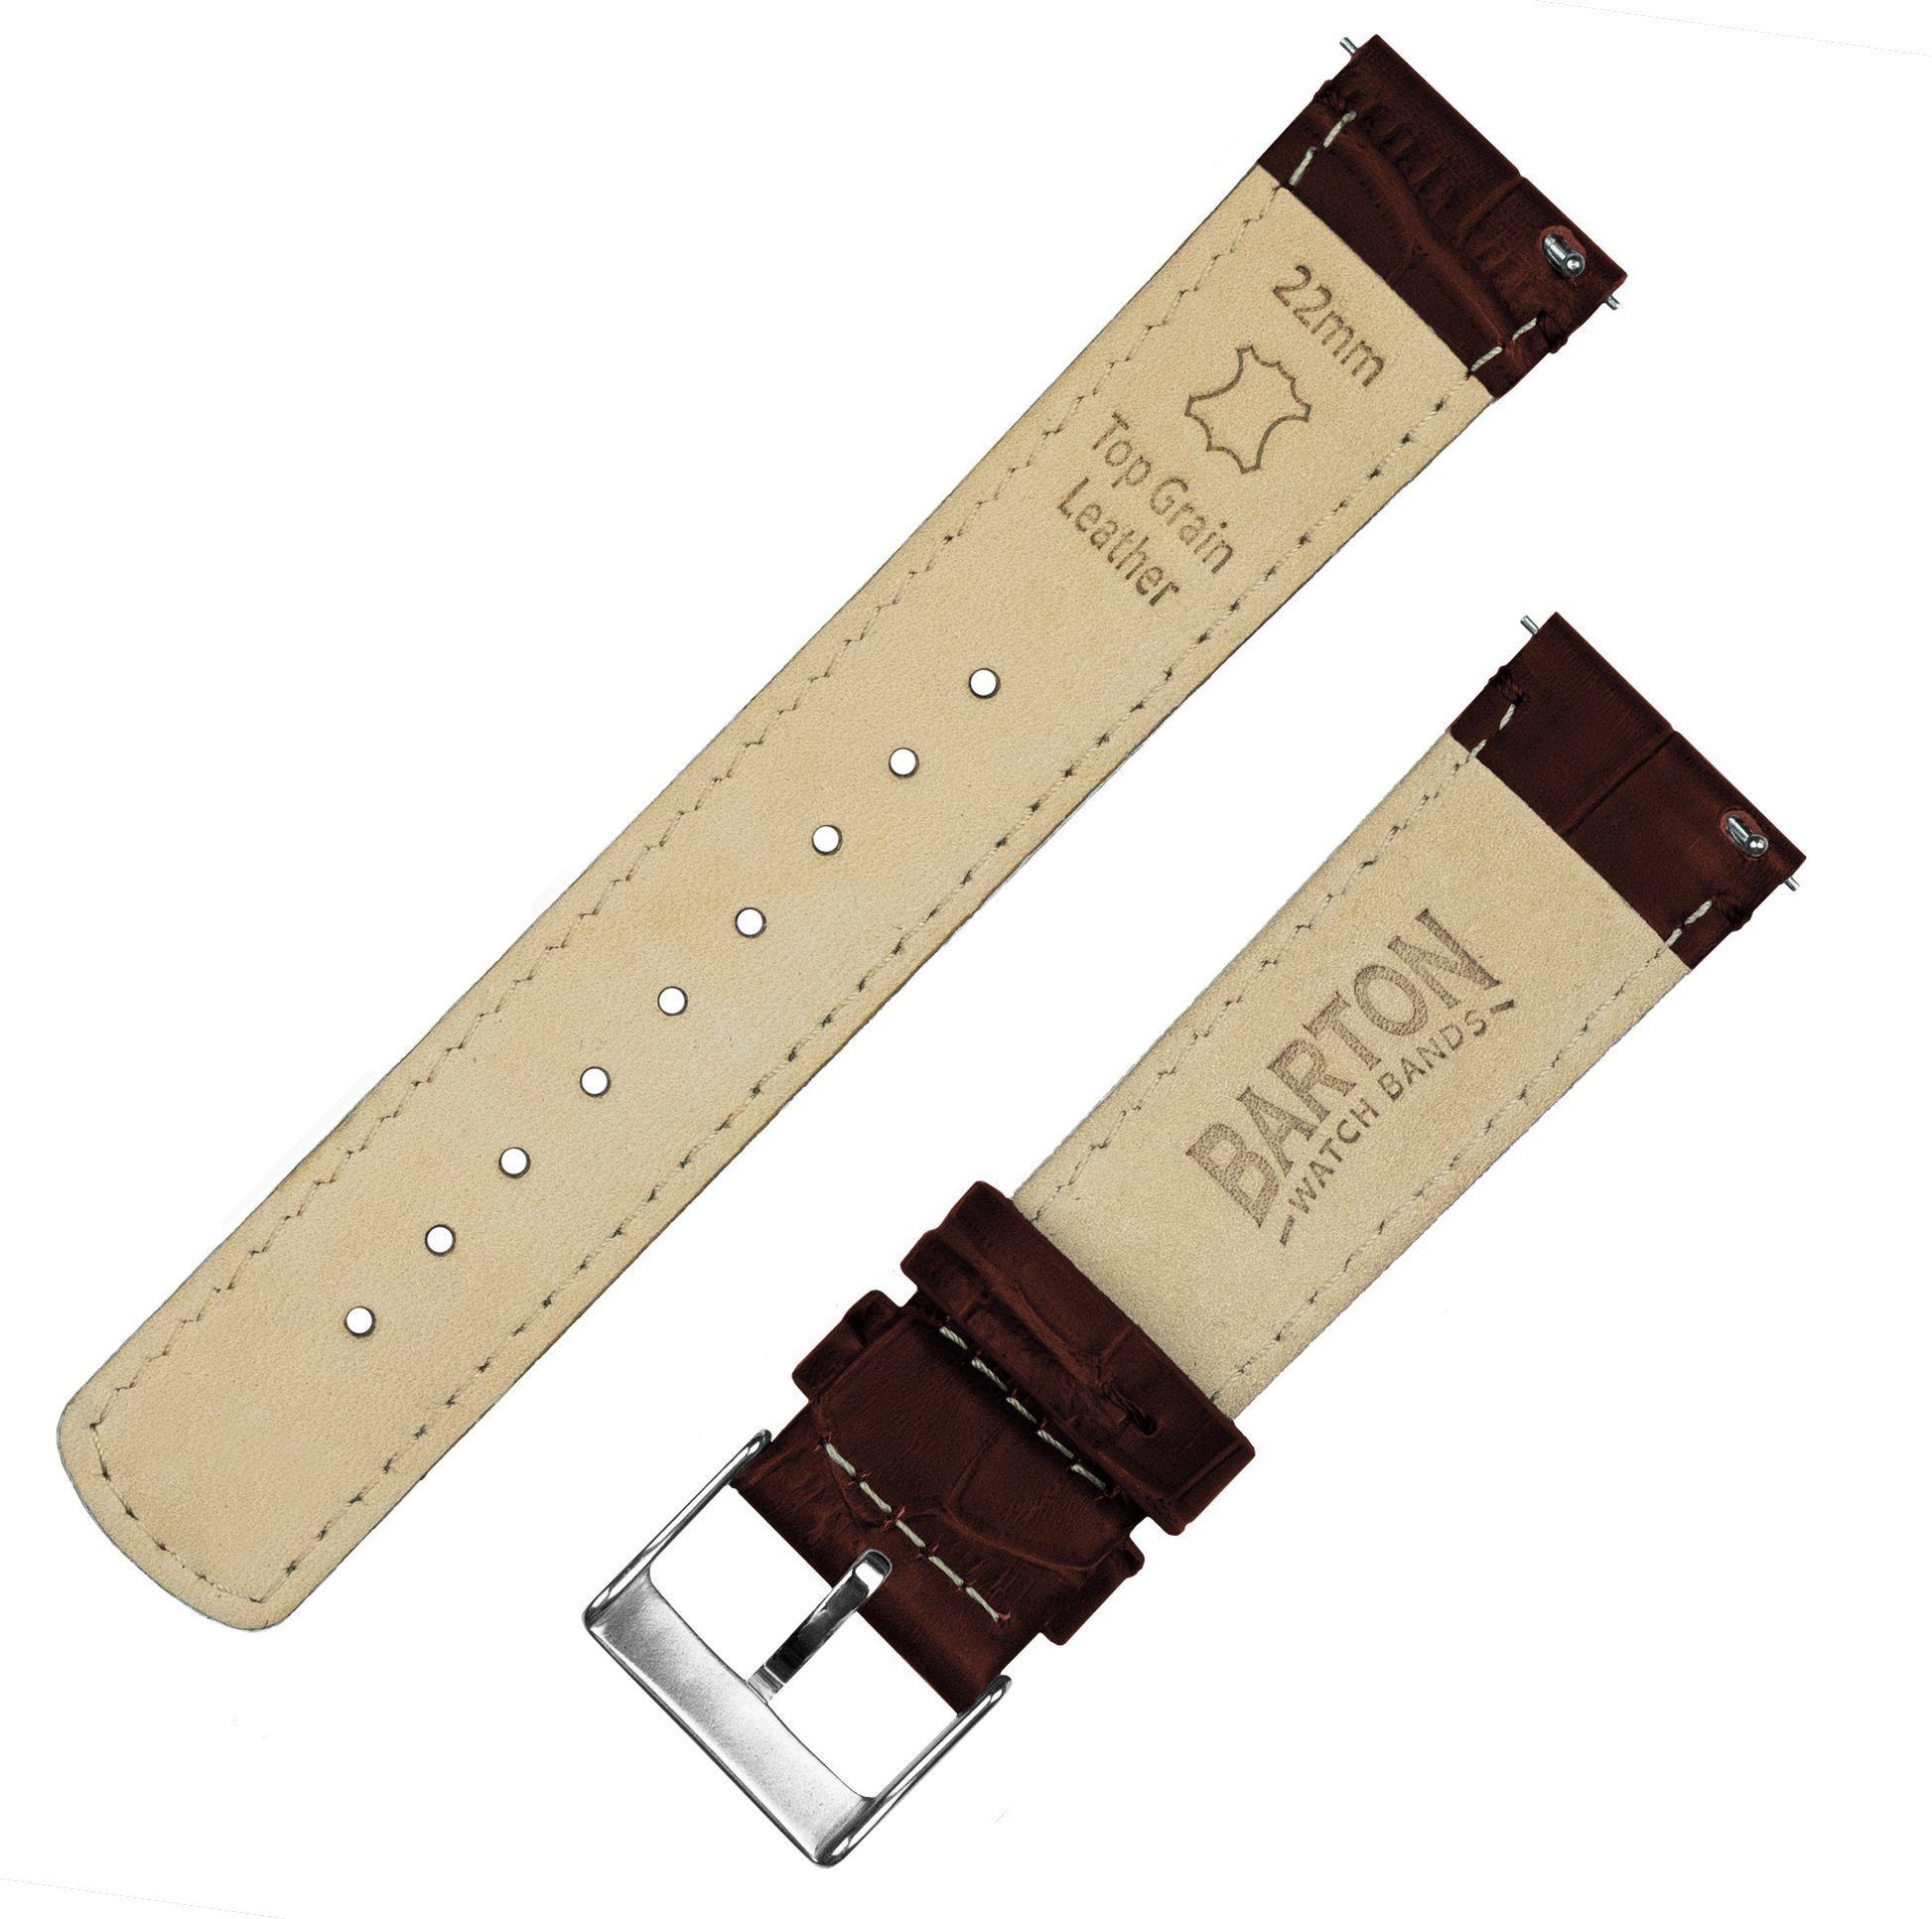 Samsung Galaxy Watch | Coffee Brown Alligator Grain Leather - Barton Watch Bands